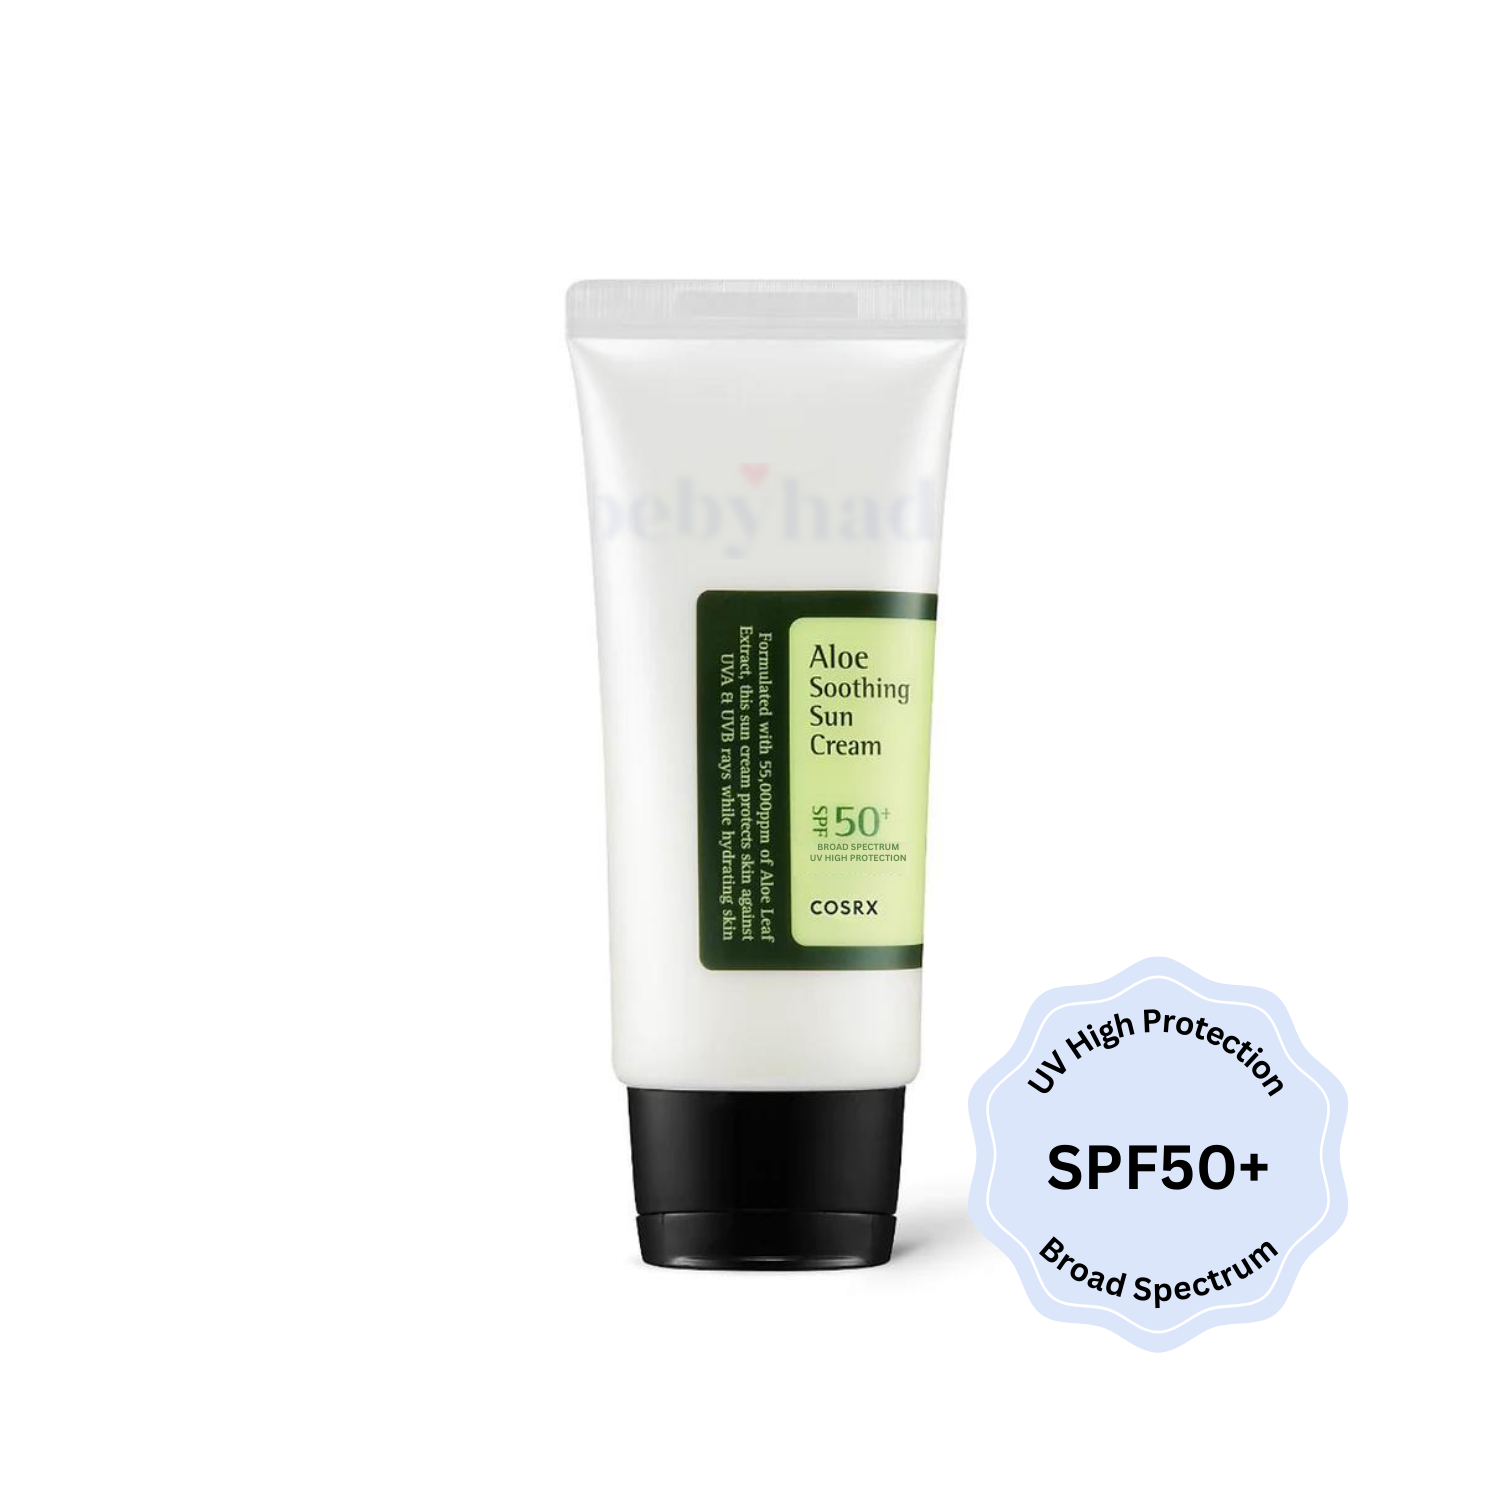 Aloe Soothing Sun Cream SPF50+ Broad Spectrum